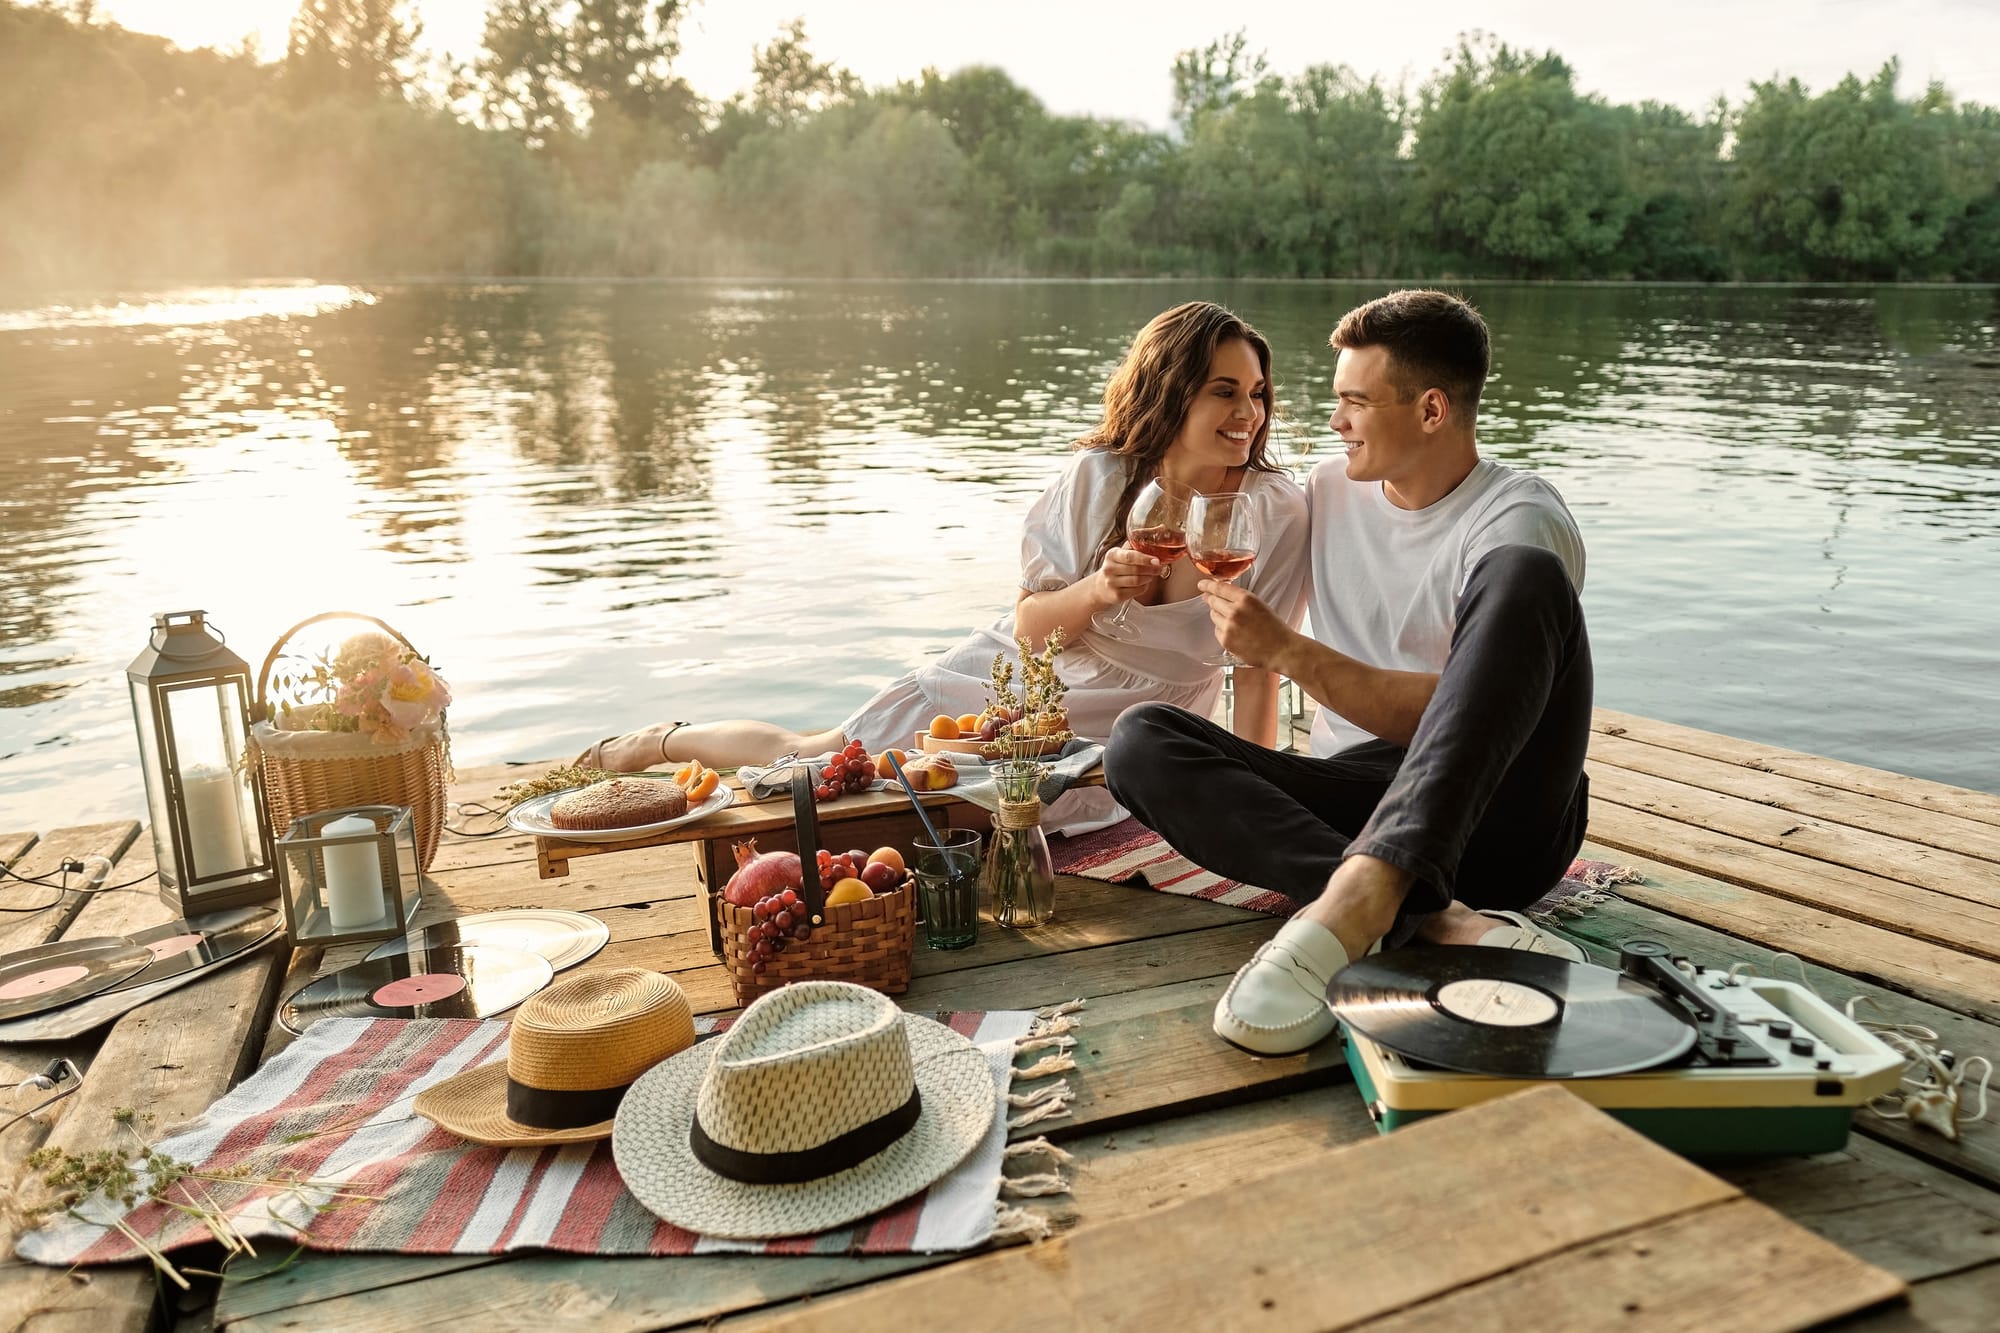 A couple in romantic picnic setting